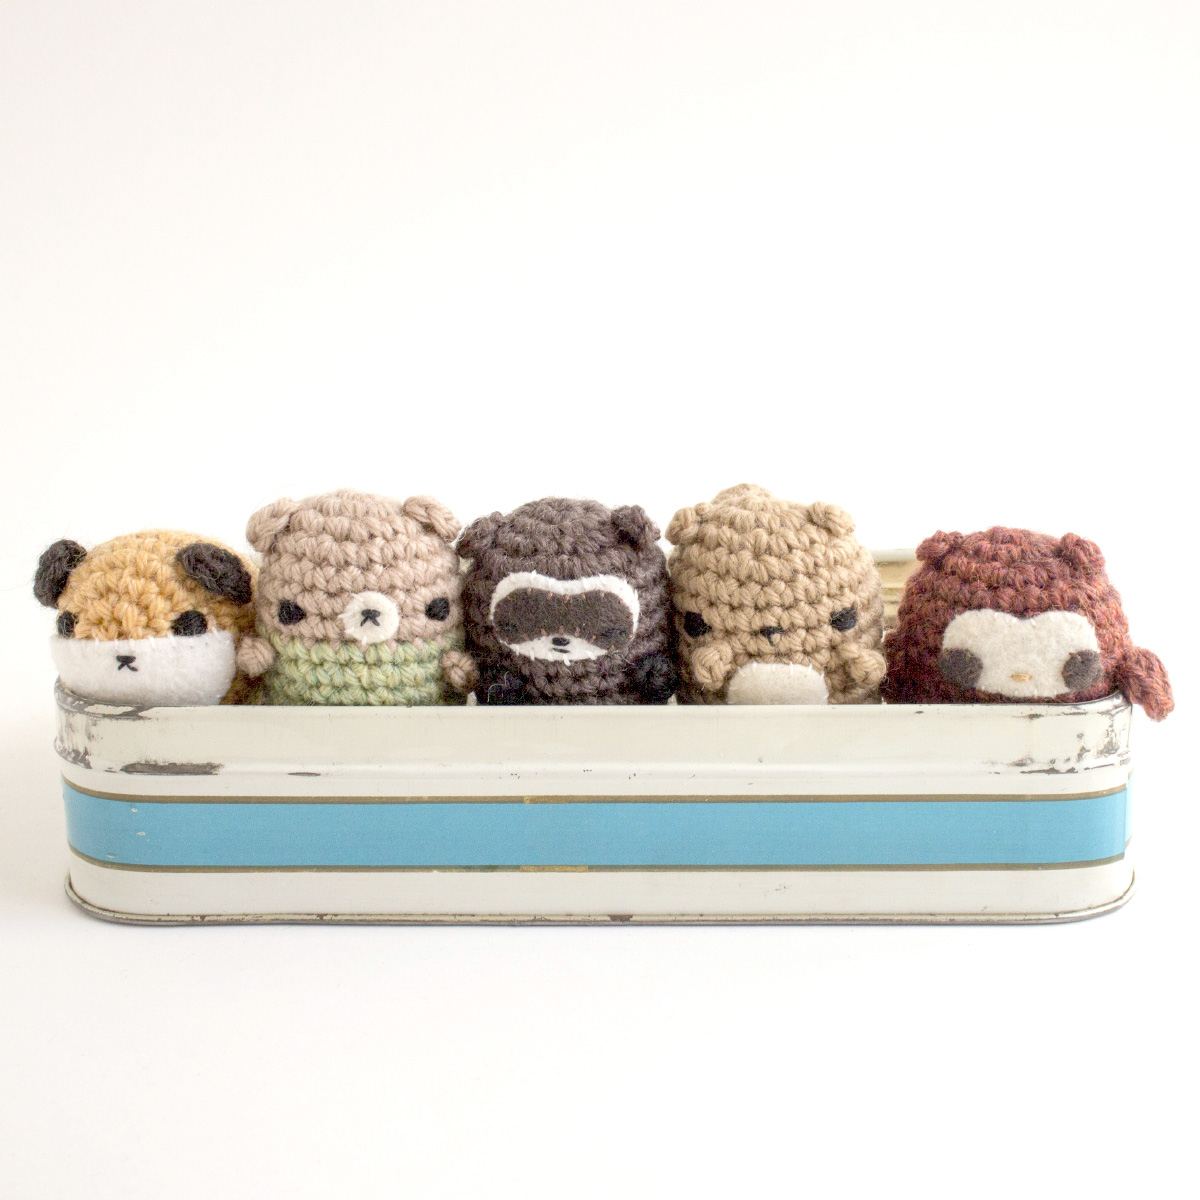 Woodland amigurumi animals from Mini Crochet Creatures book